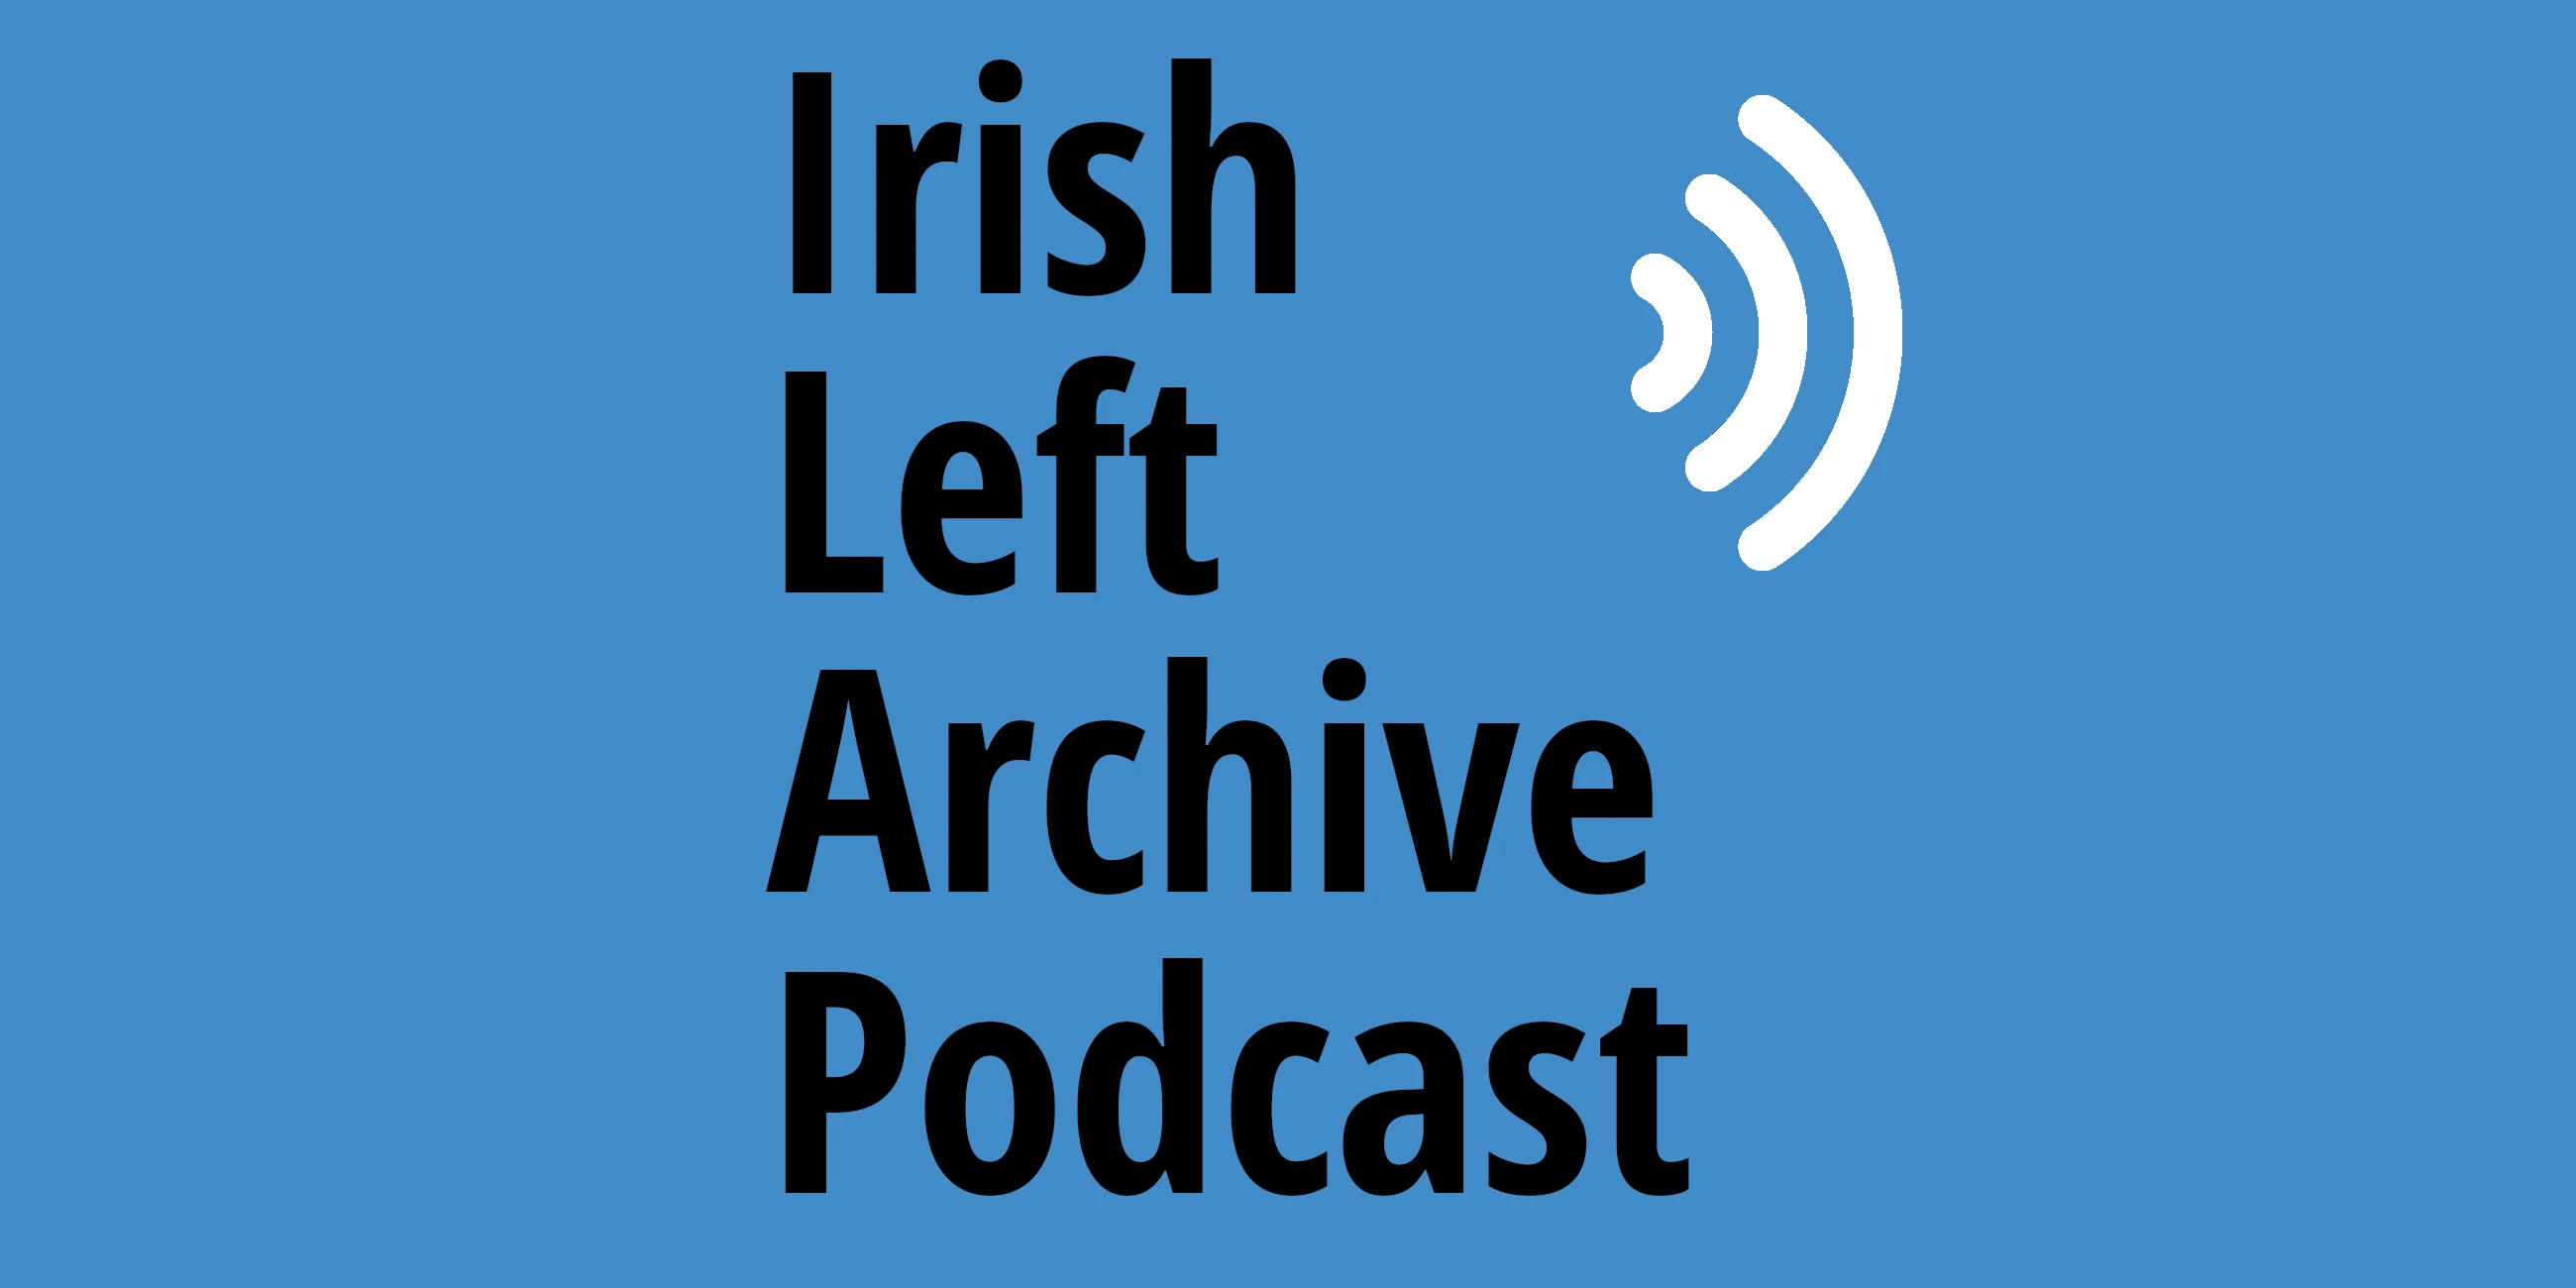 Irish Left Archive Podcast